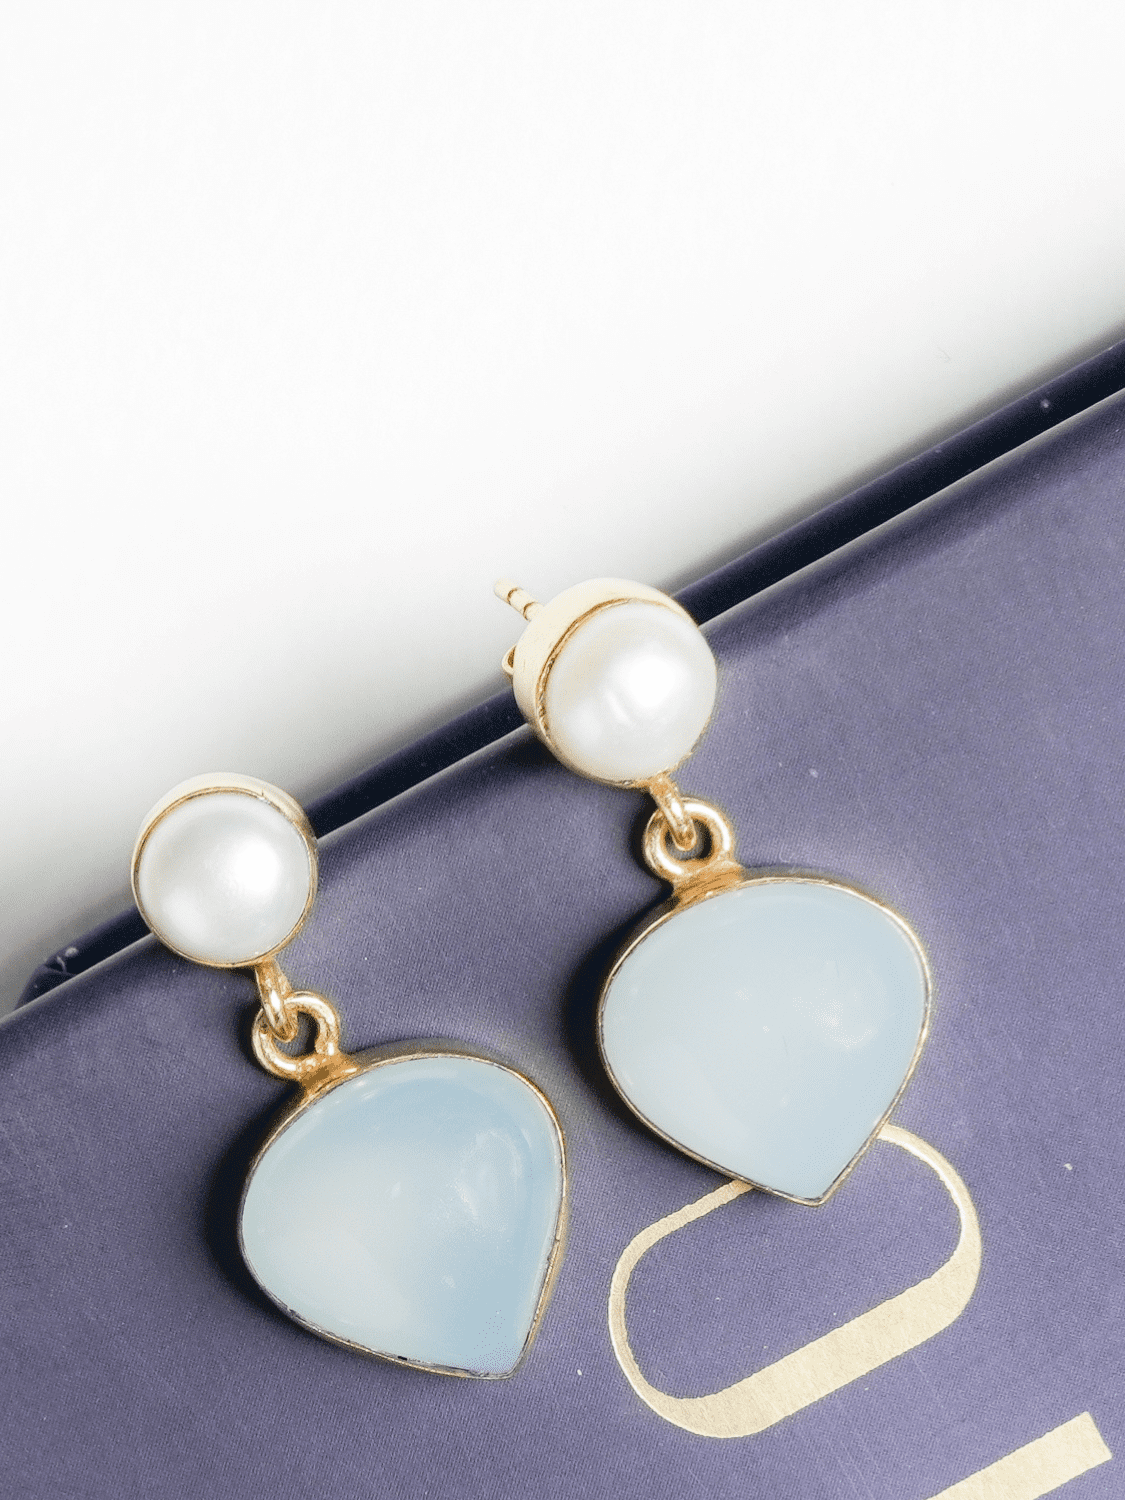 Powder blue heart shaped small dangler earrings